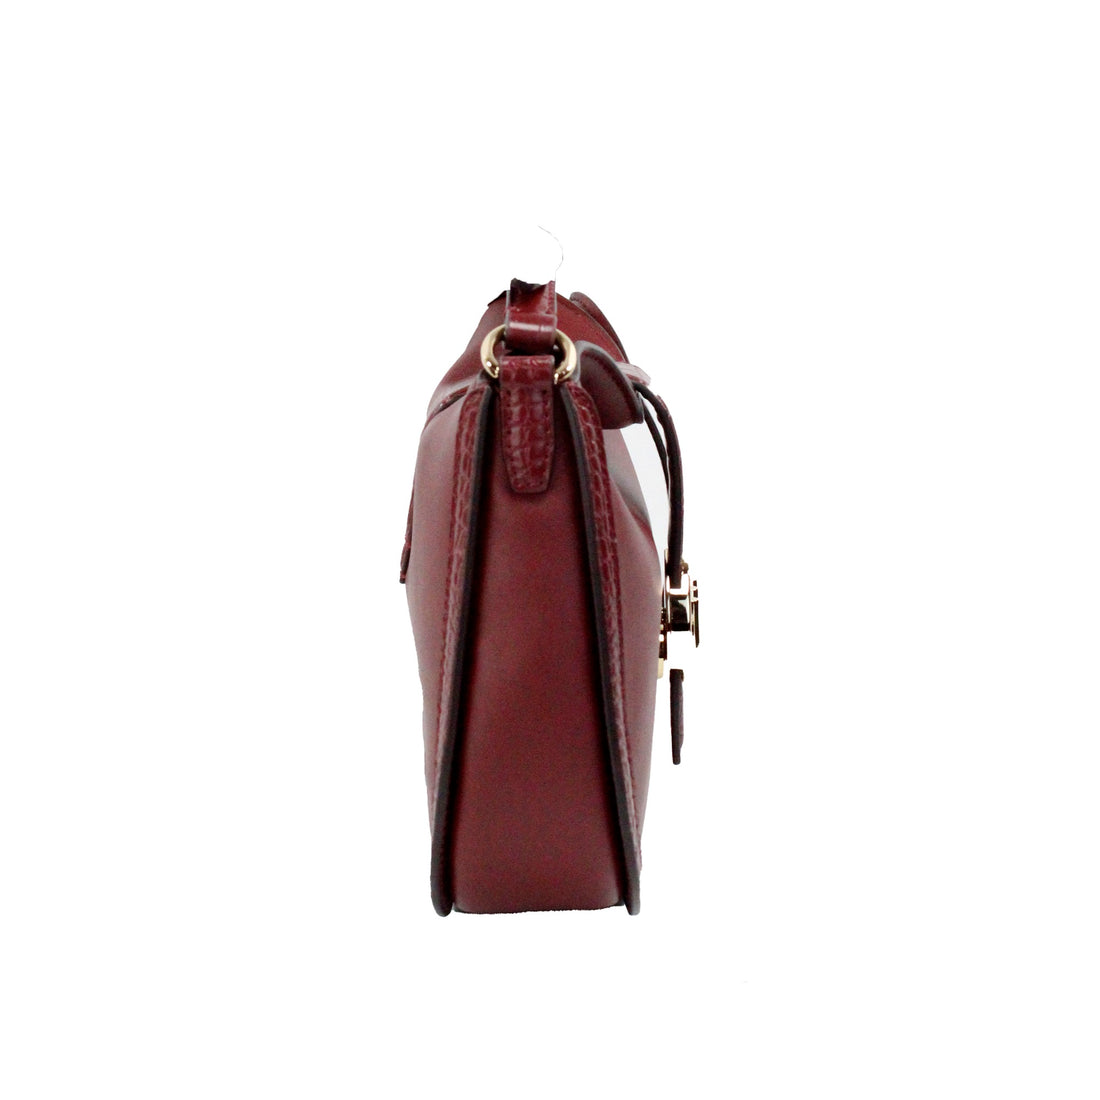 Michael Kors Gabby Small Dark Cherry Leather Foldover Hobo Crossbody Bag